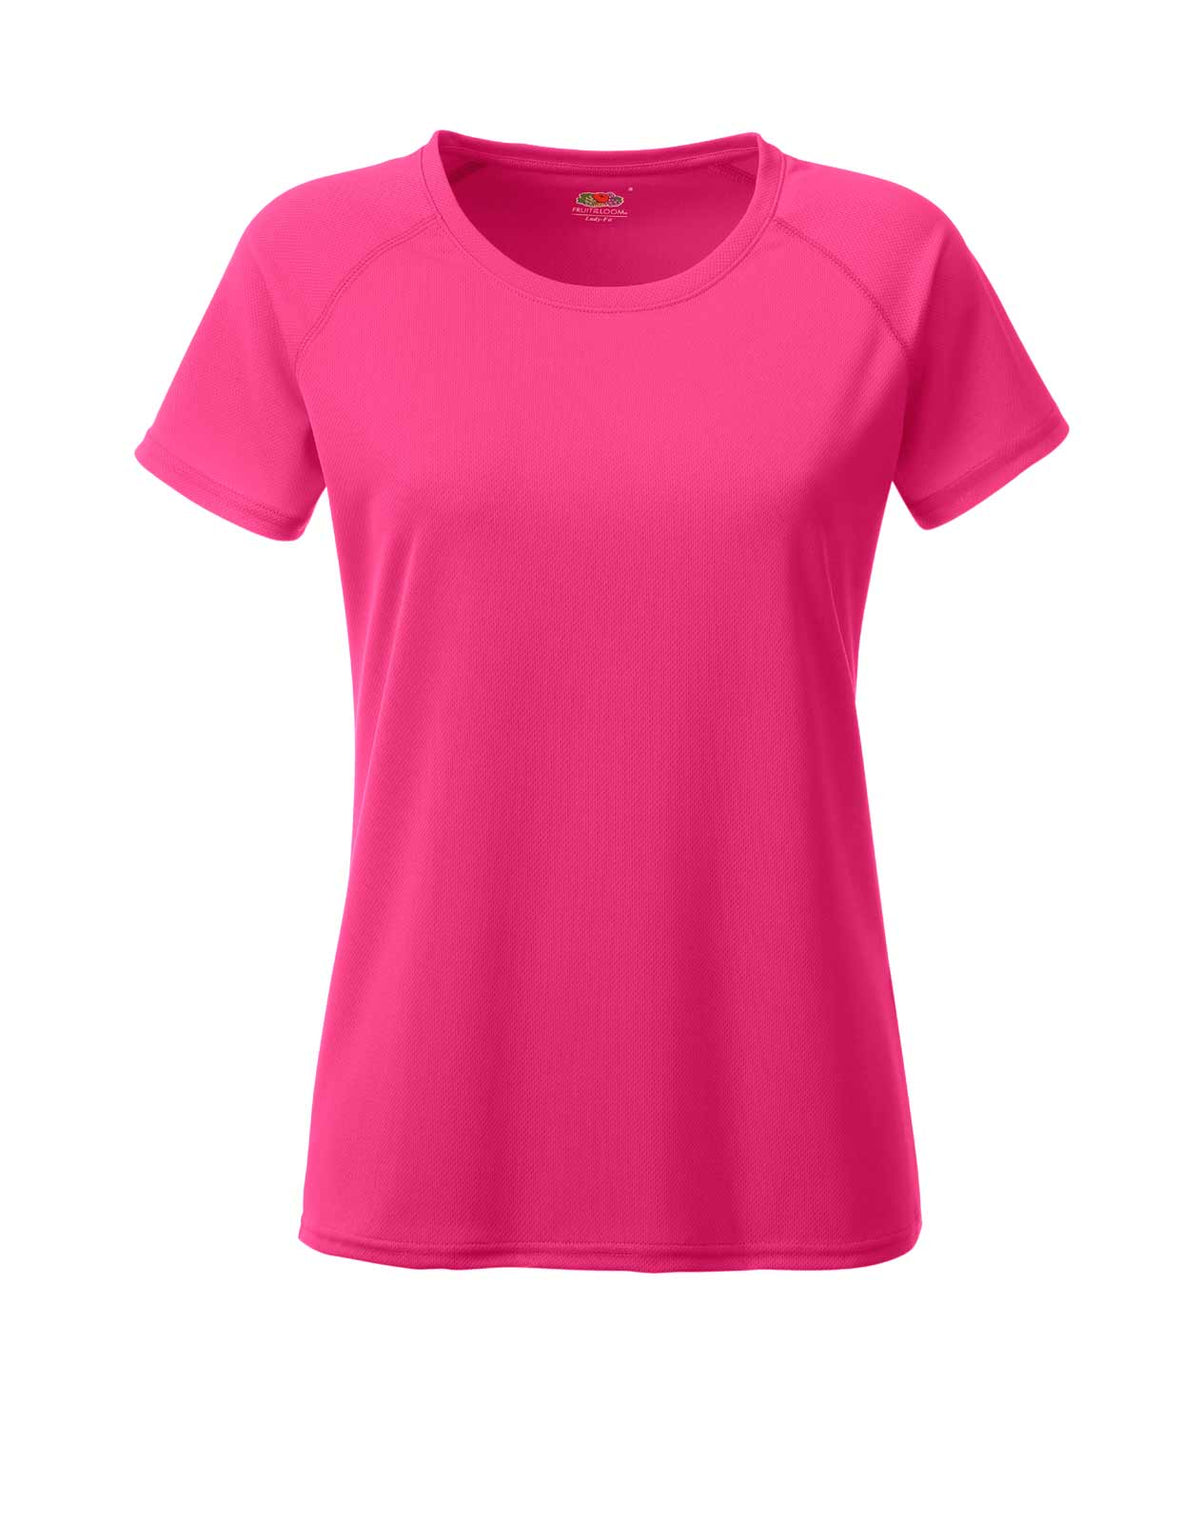 FRUIT OF THE LOOM Damen Marken-Sportshirt, pink